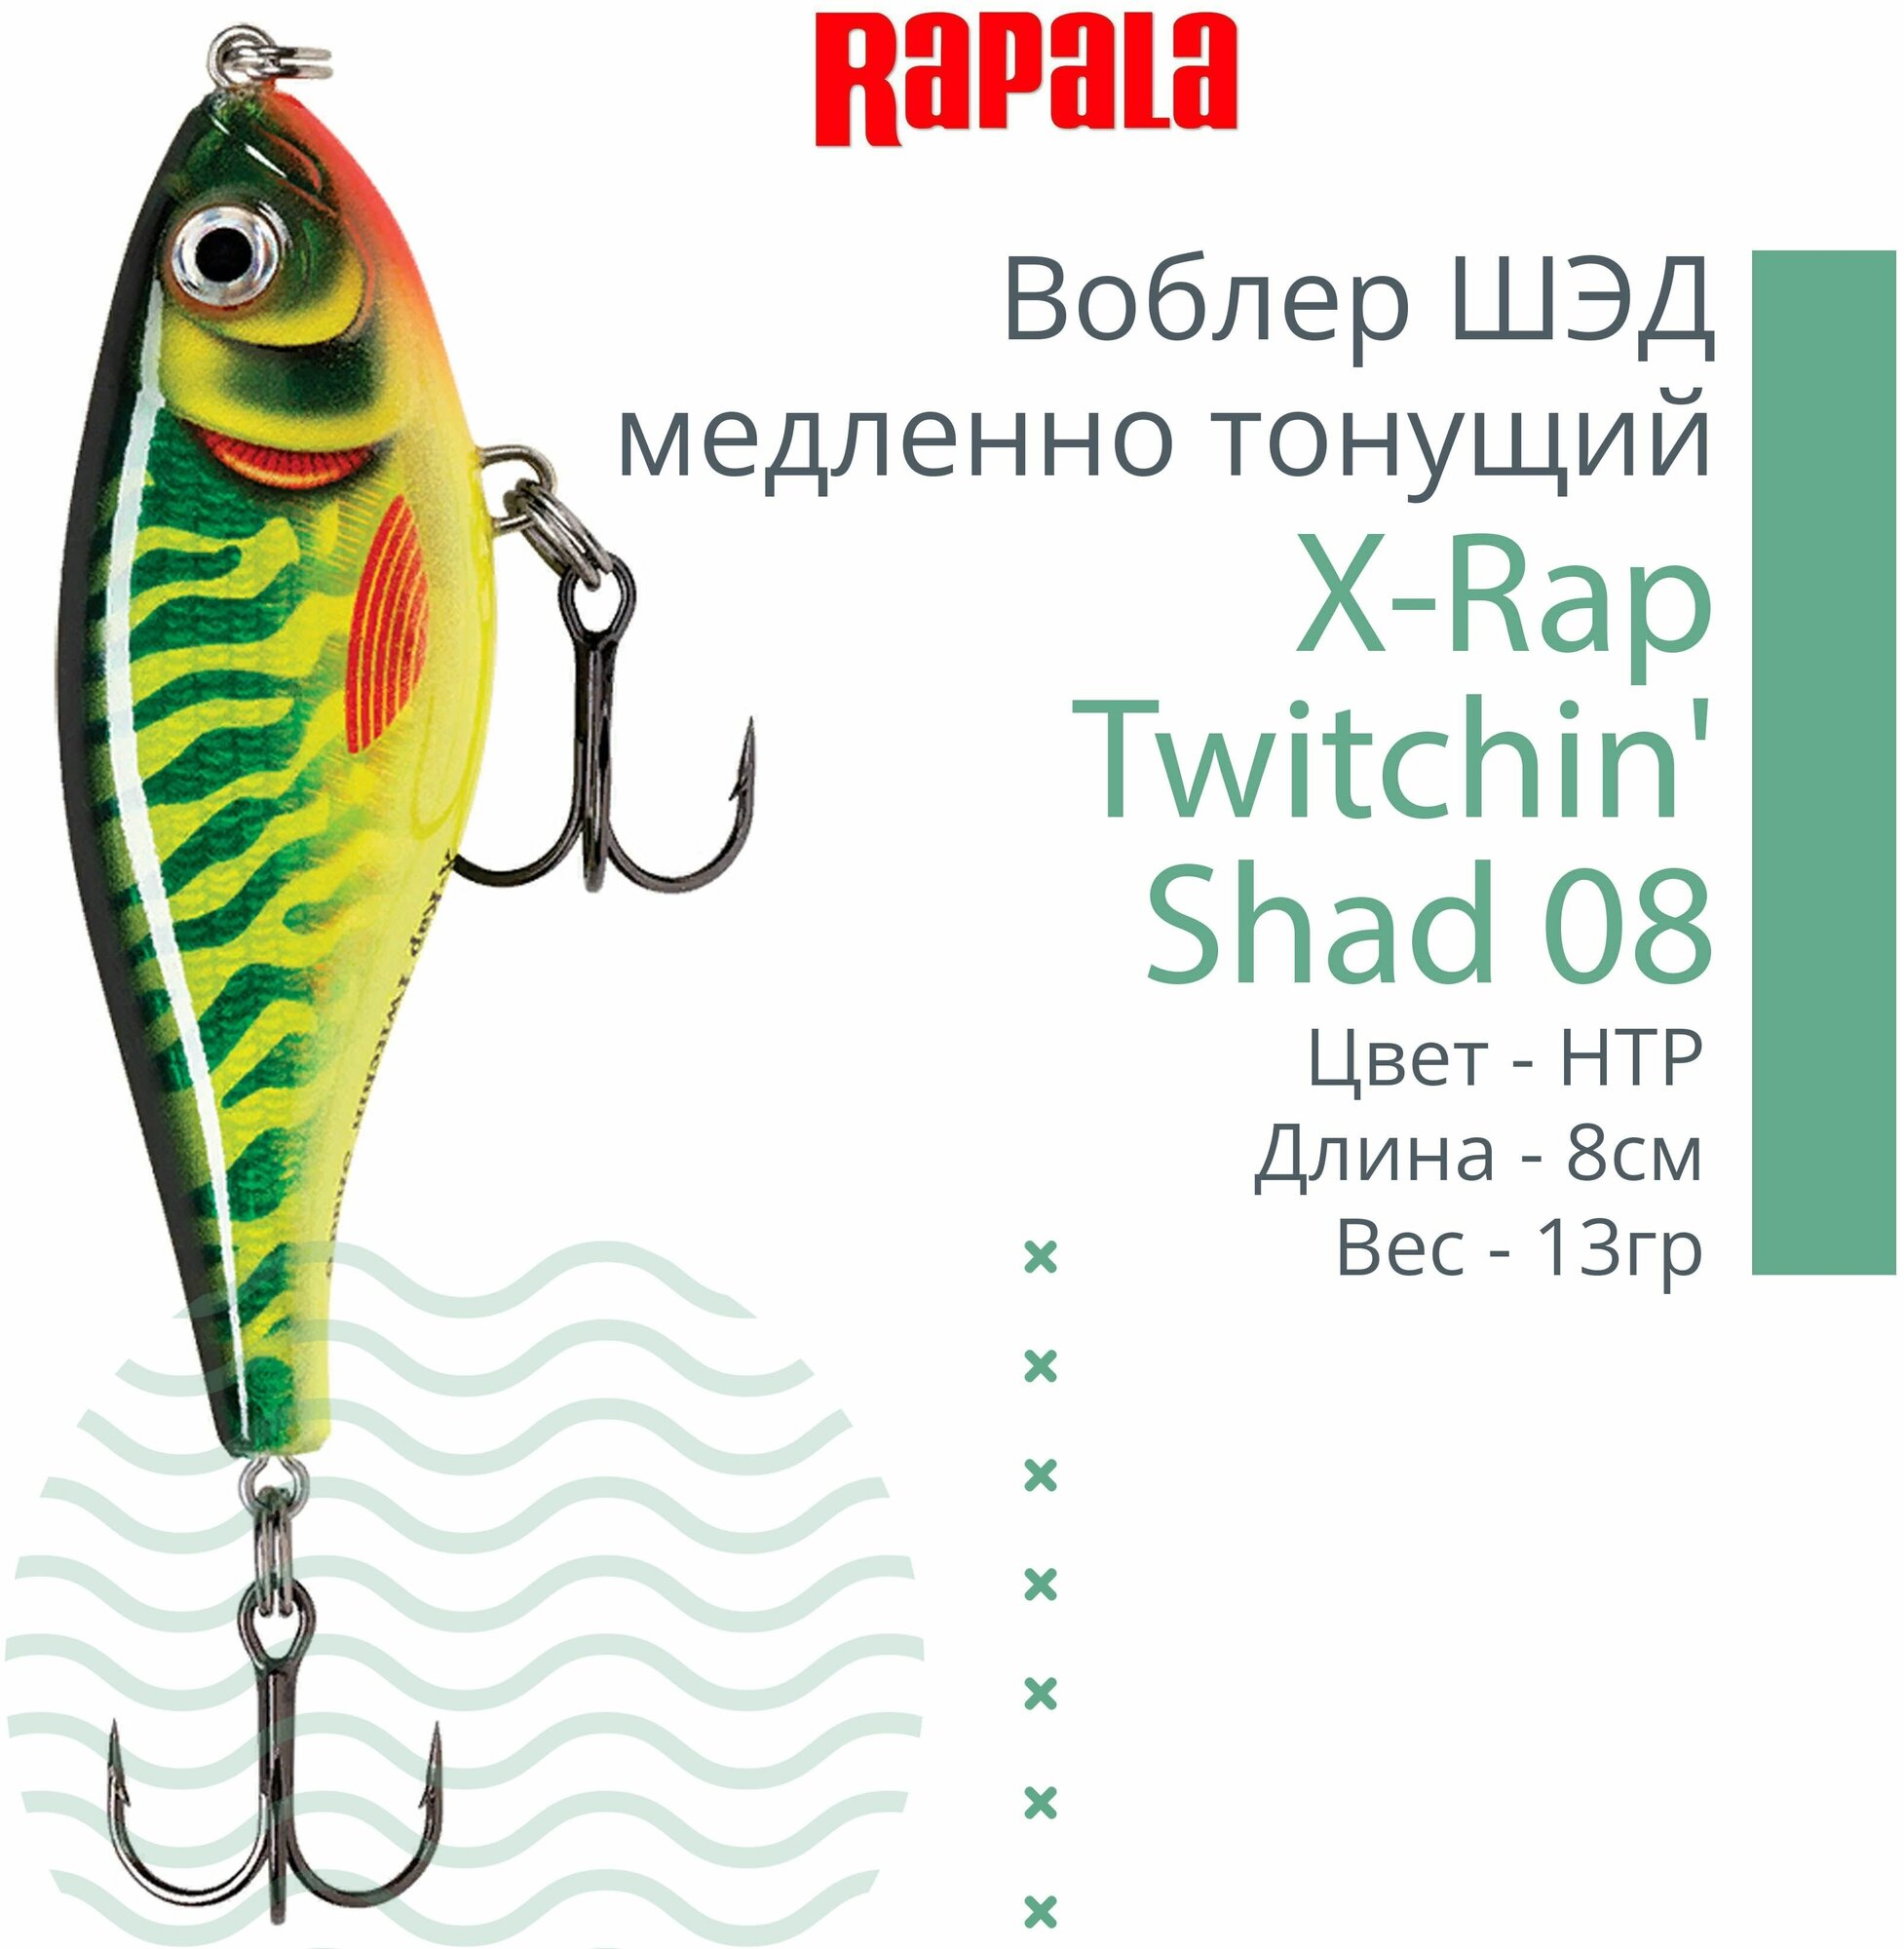 Воблер для рыбалки RAPALA X-Rap Twitchin' Shad 08, 8см, 13гр, цвет HTP, медленно тонущий